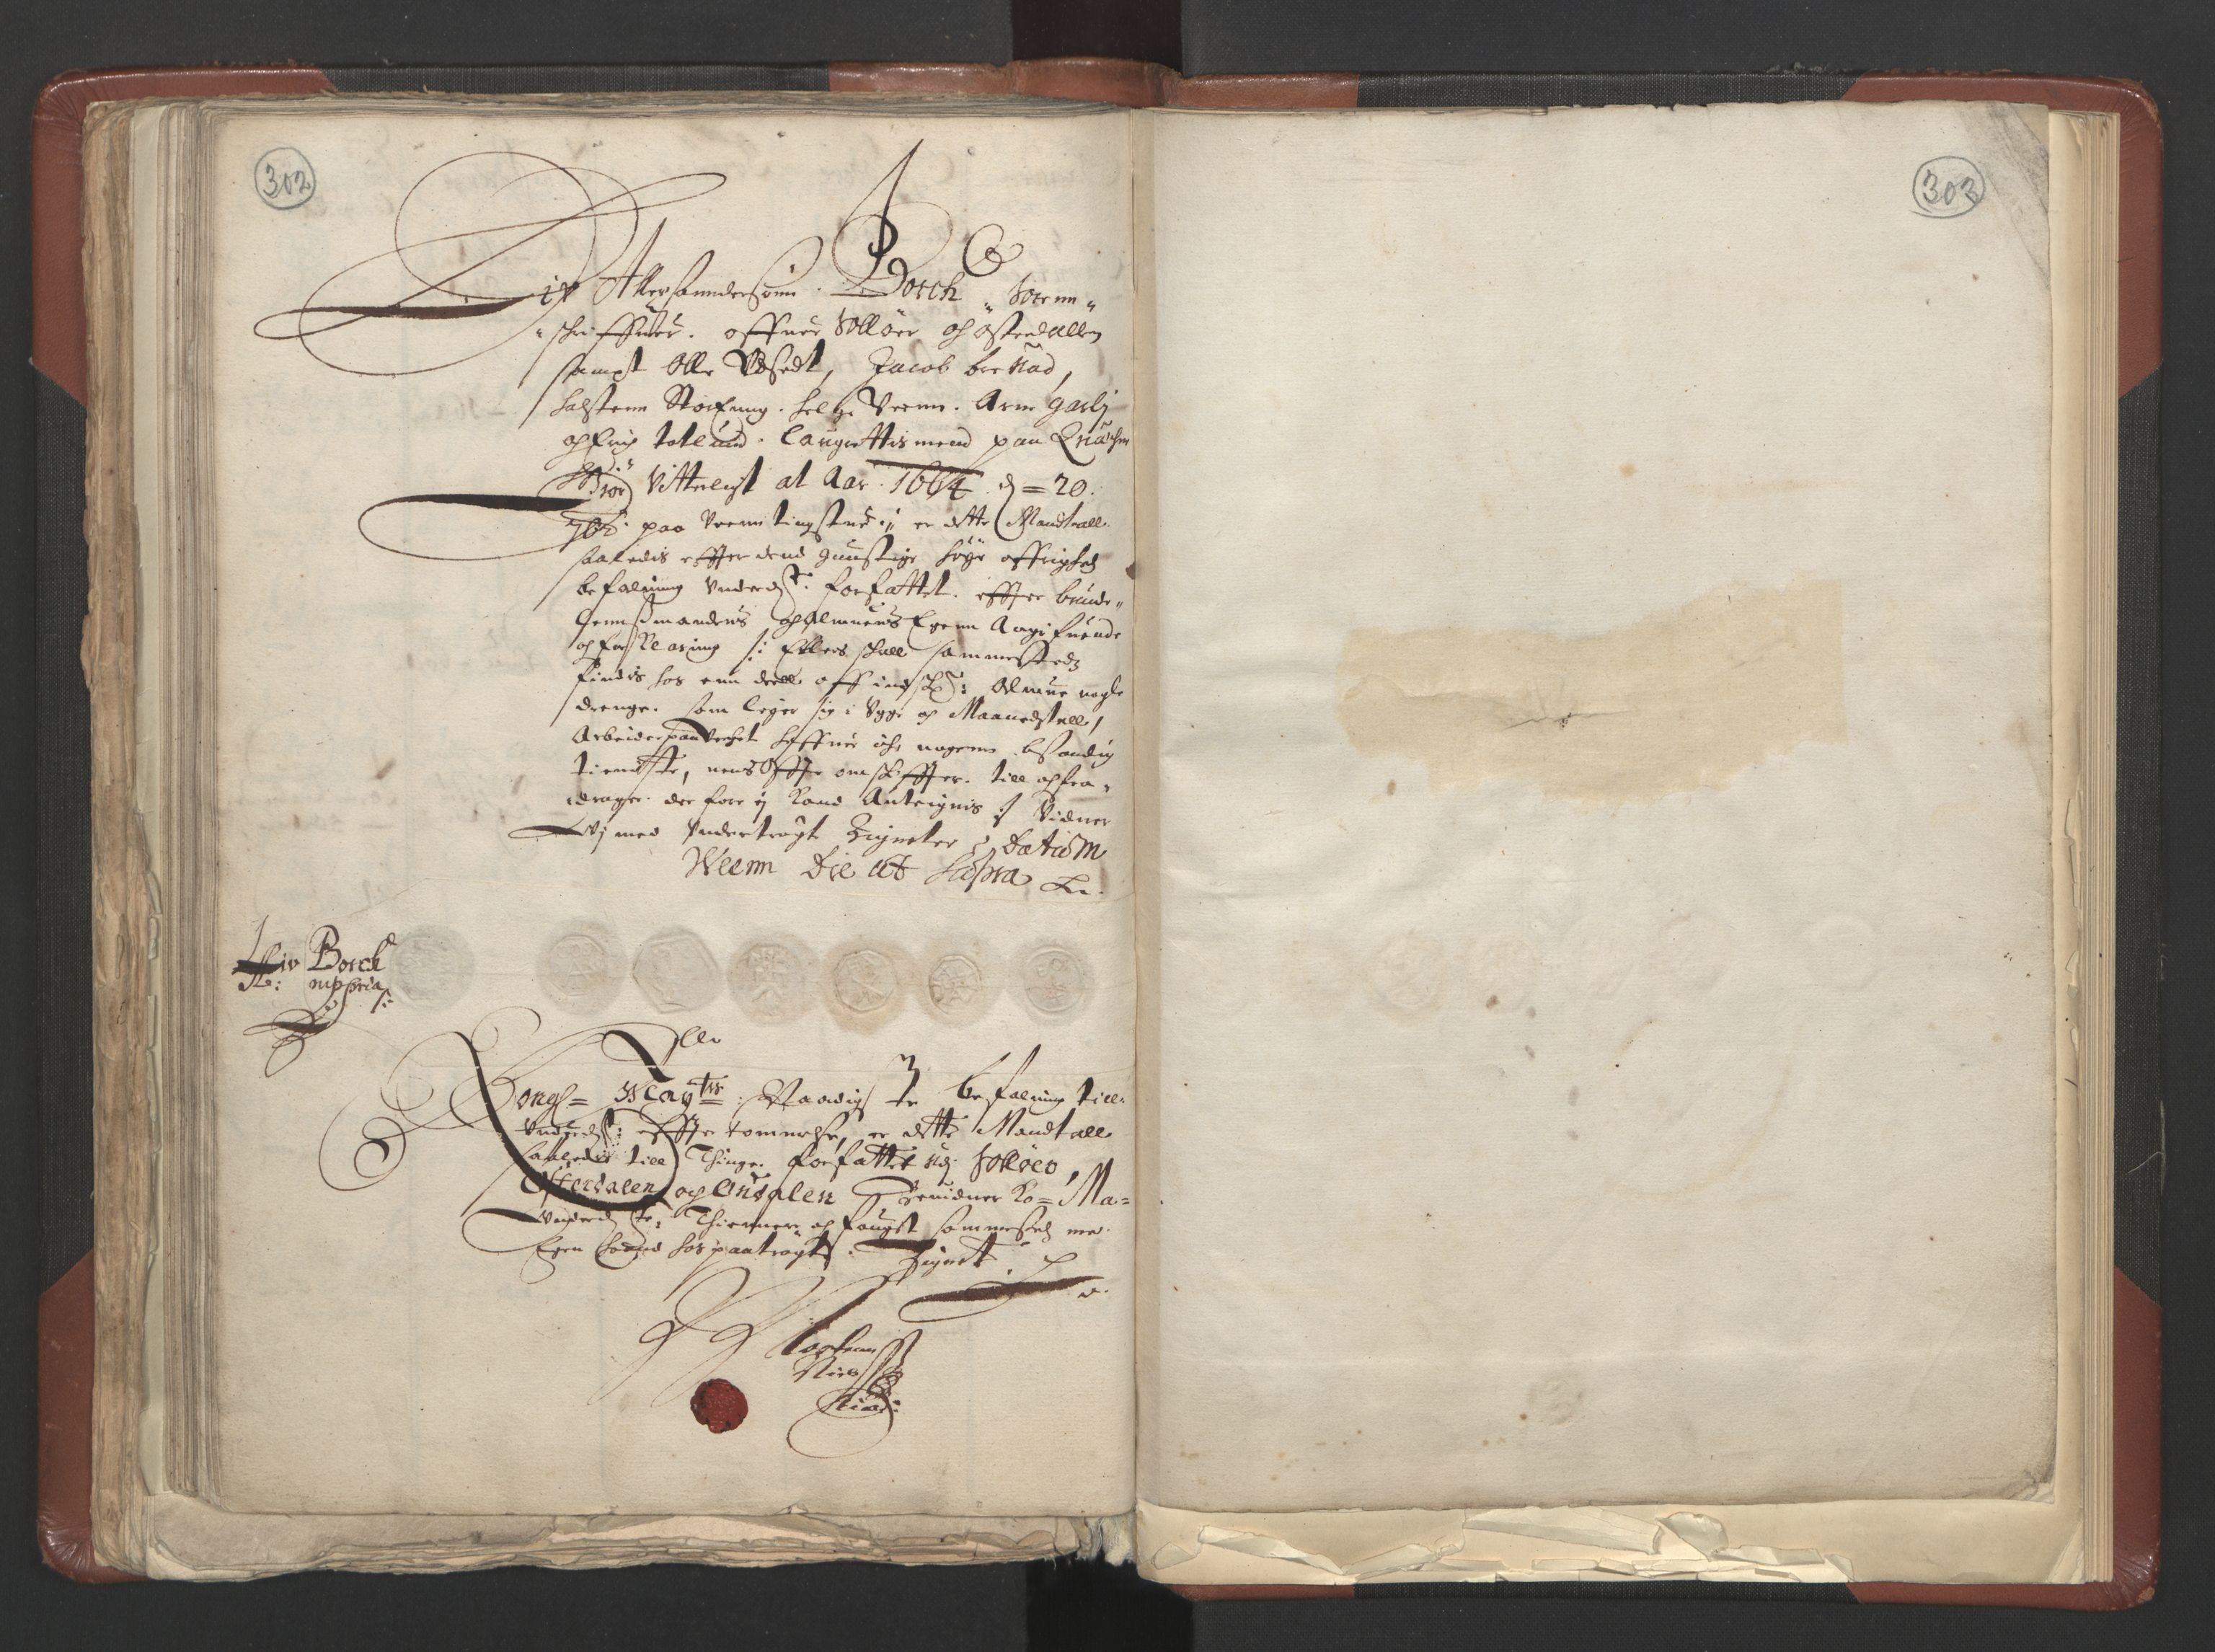 RA, Fogdenes og sorenskrivernes manntall 1664-1666, nr. 3: Hedmark fogderi og Solør, Østerdal og Odal fogderi, 1664, s. 302-303